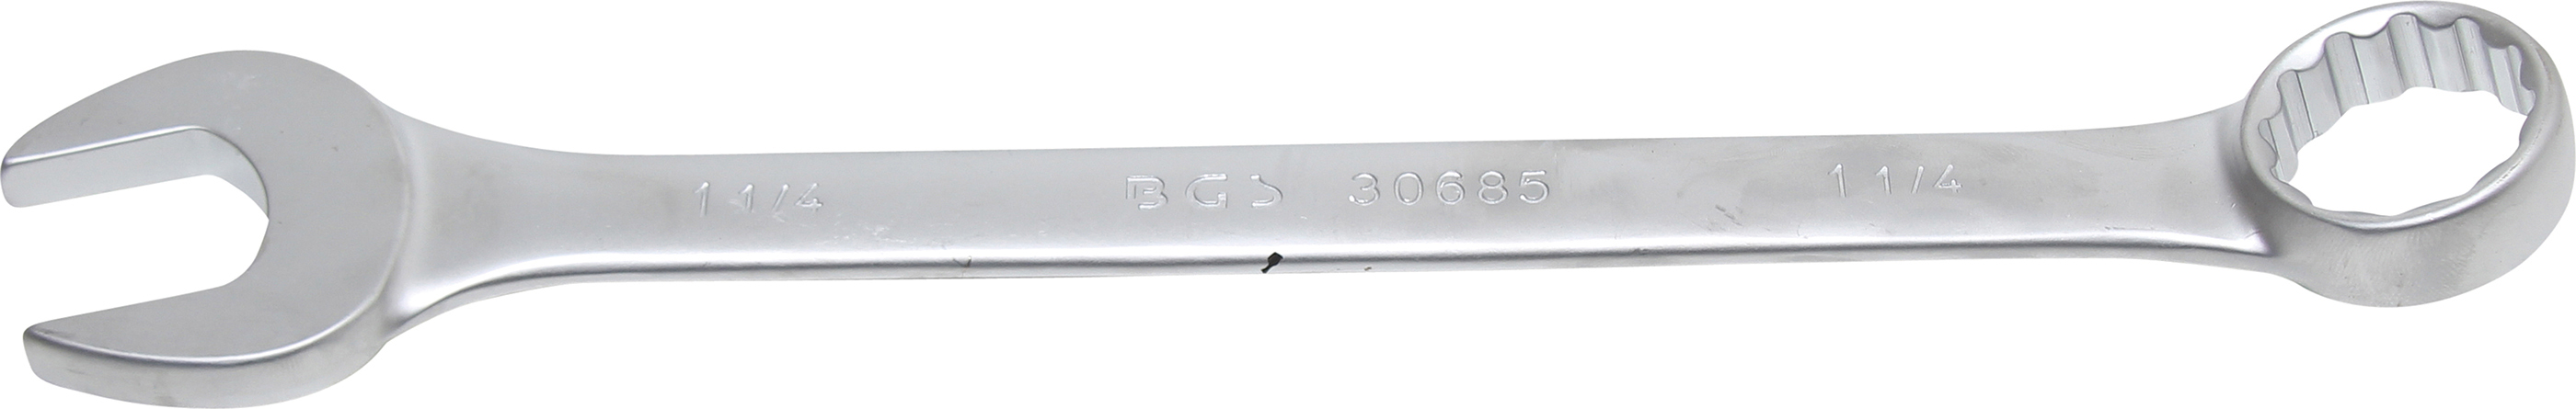 BGS 30685 Cheie combinată forjata la rece|marime in toli |1 1/4"